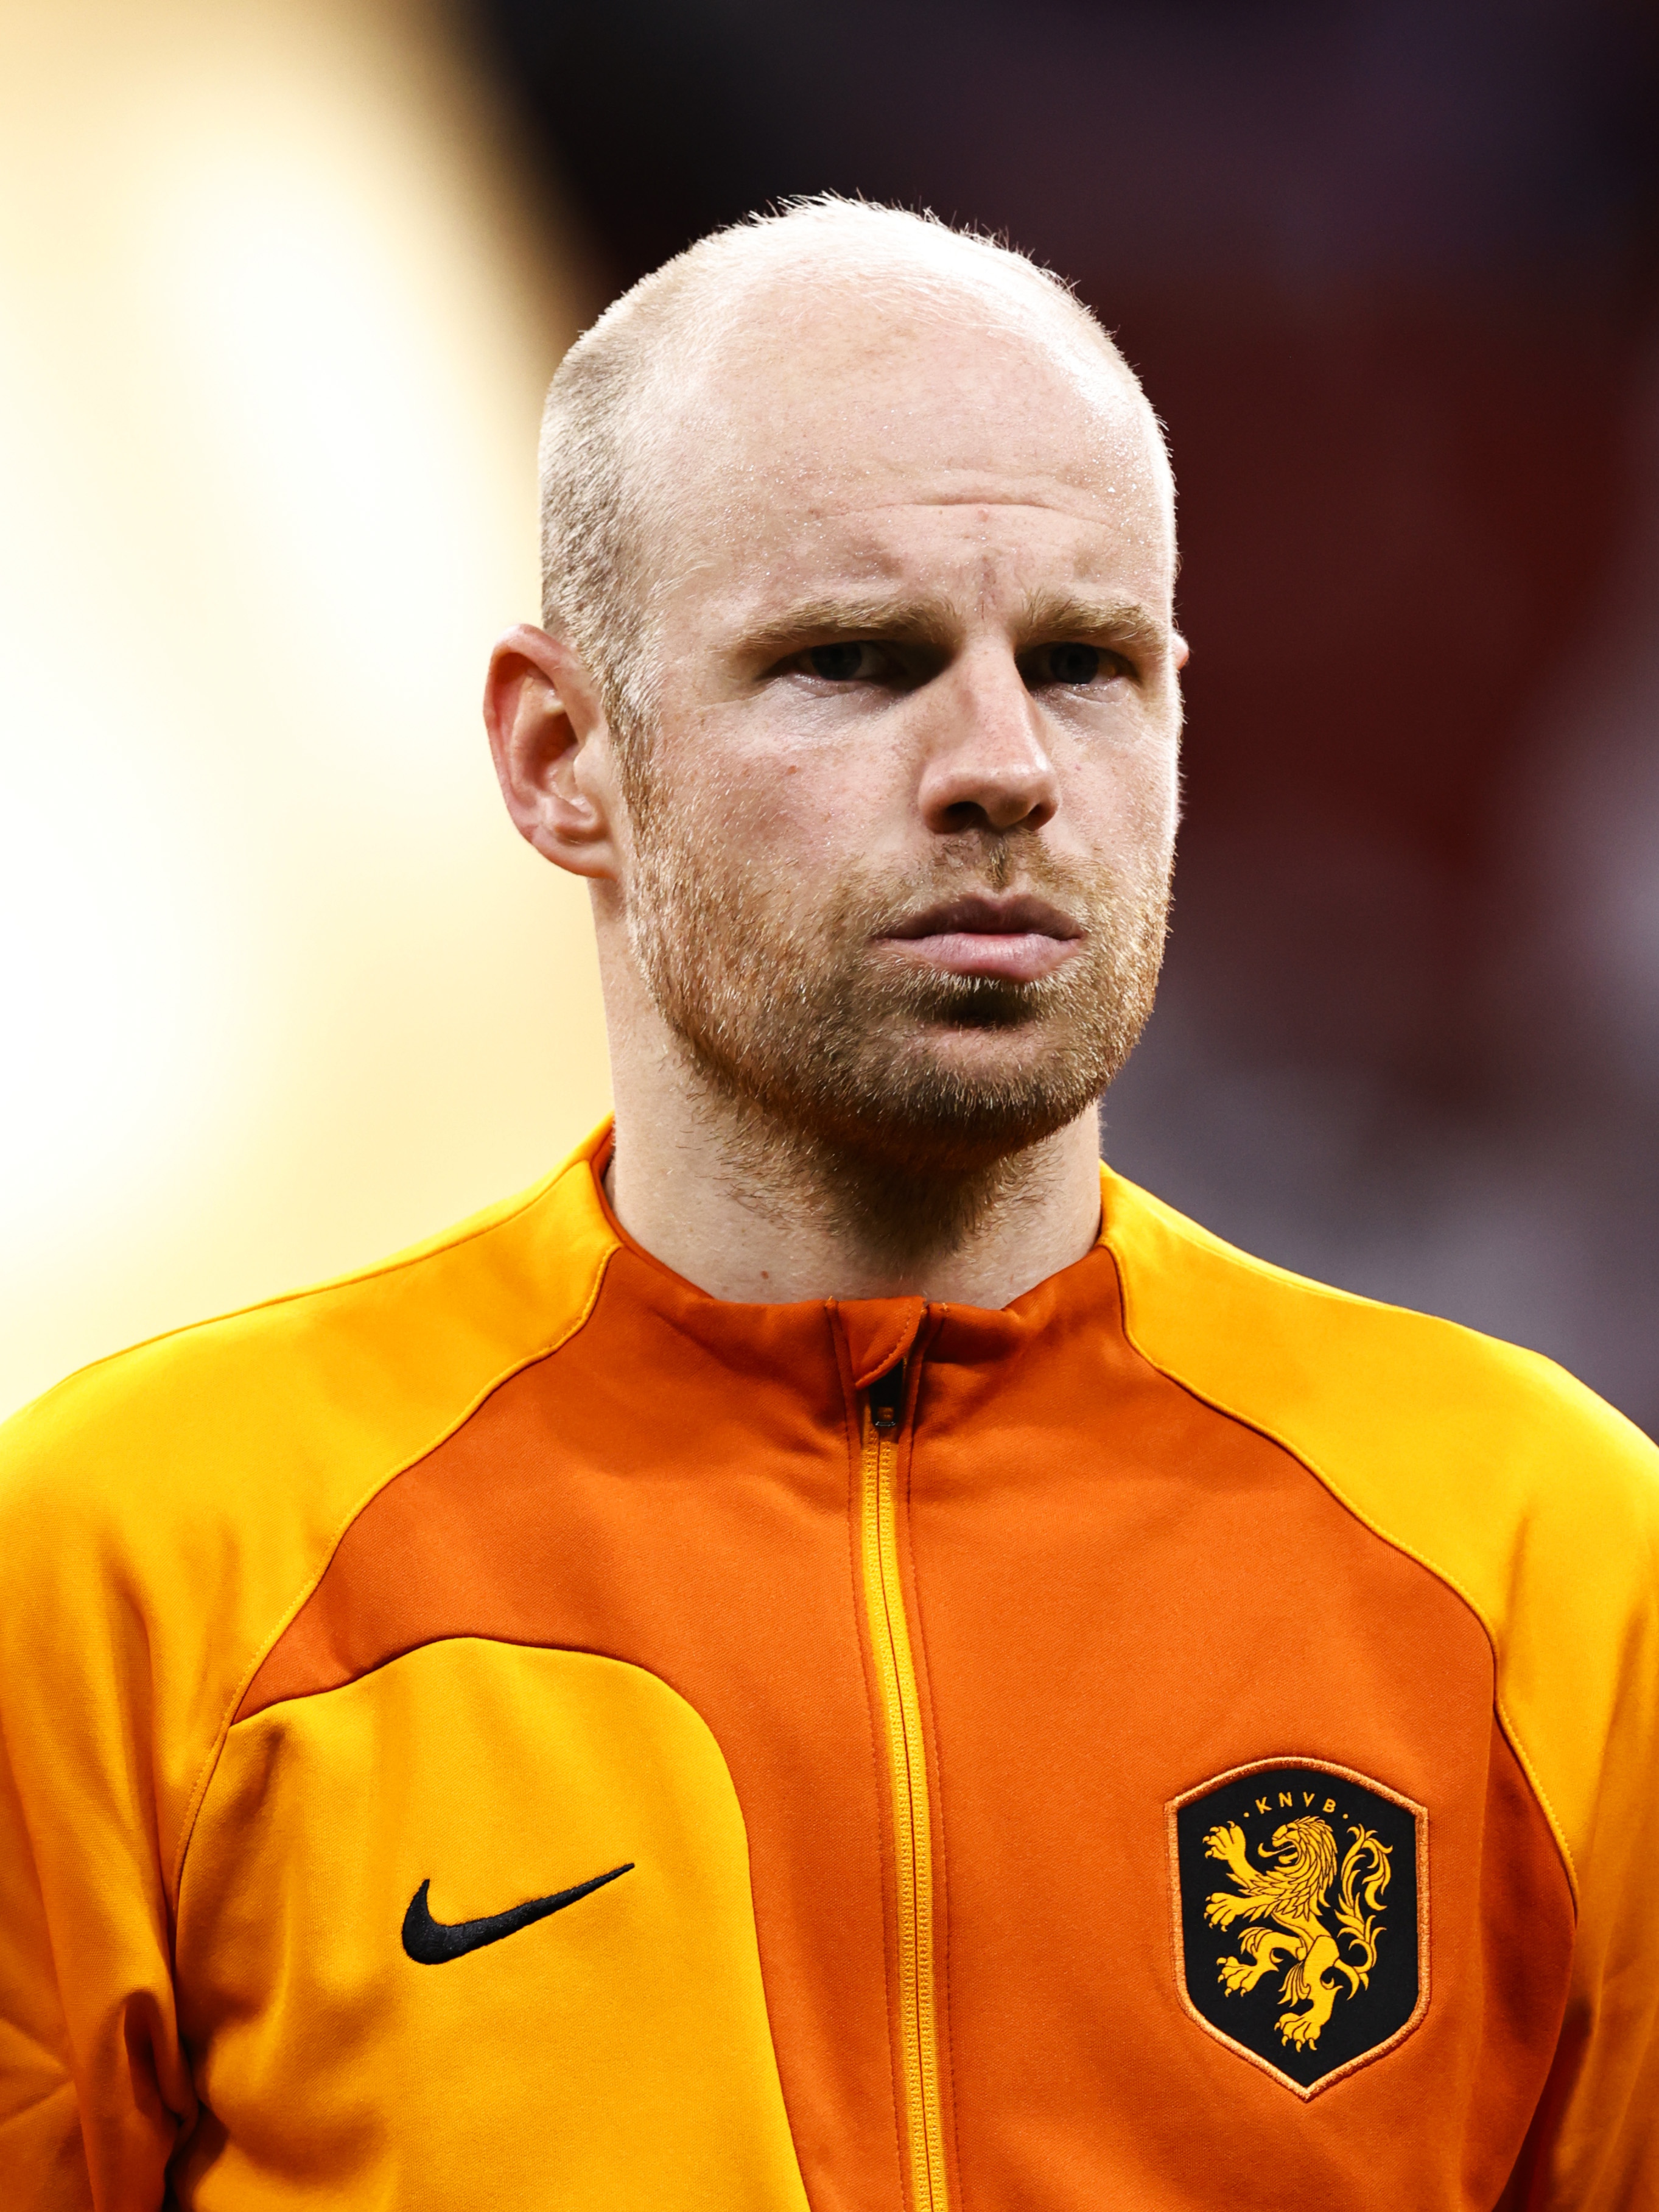 FIFA World Cup Qatar 2022”The Netherlands v Qatar”